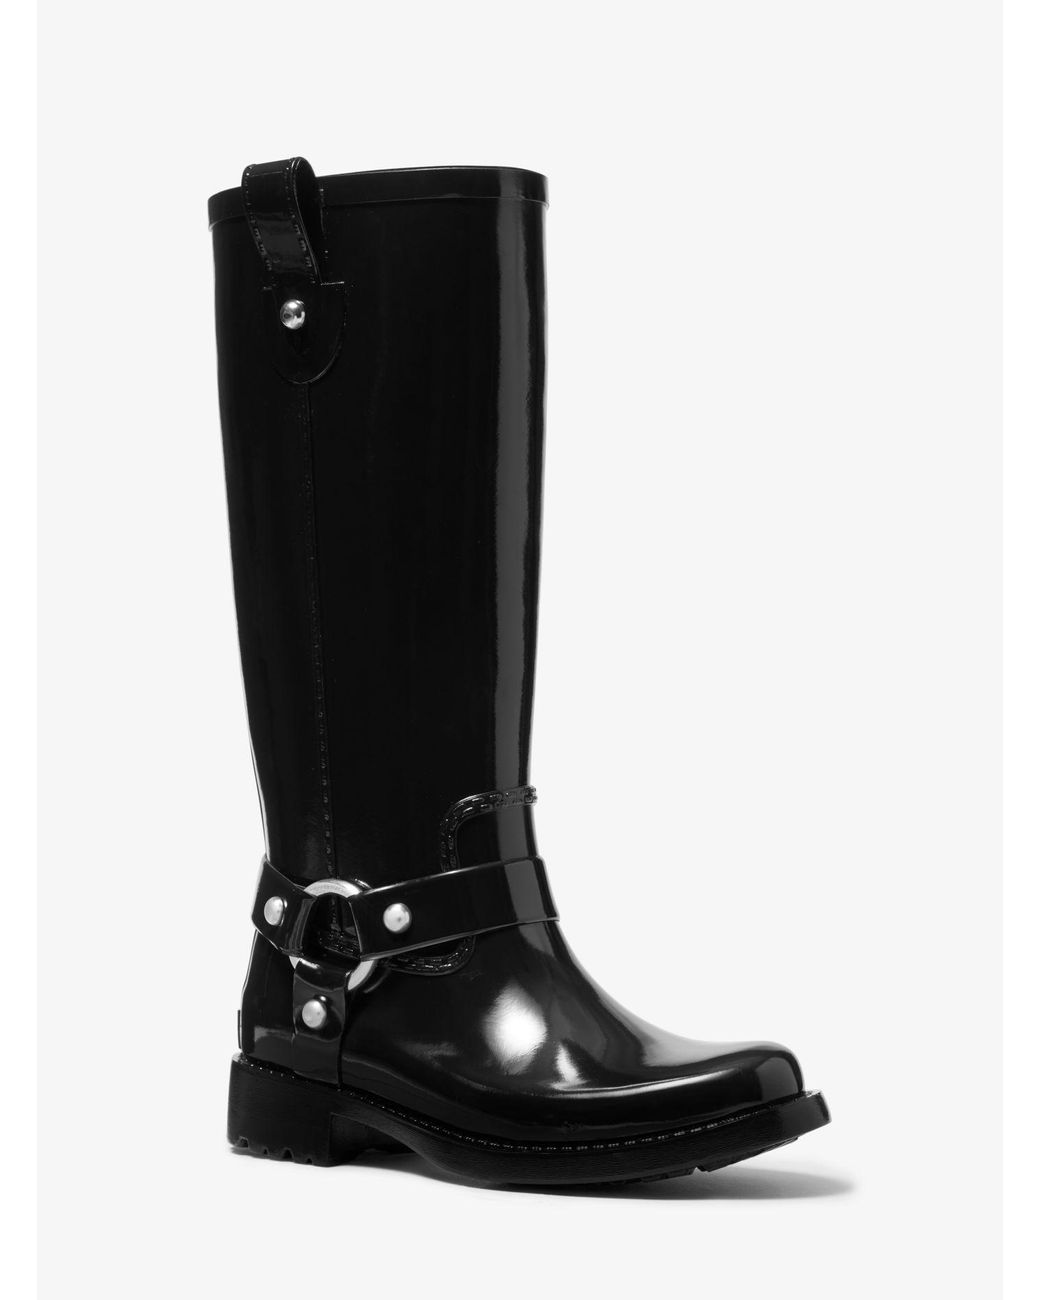 Michael Kors Stormy Rubber Knee Rain Boot in Black | Lyst